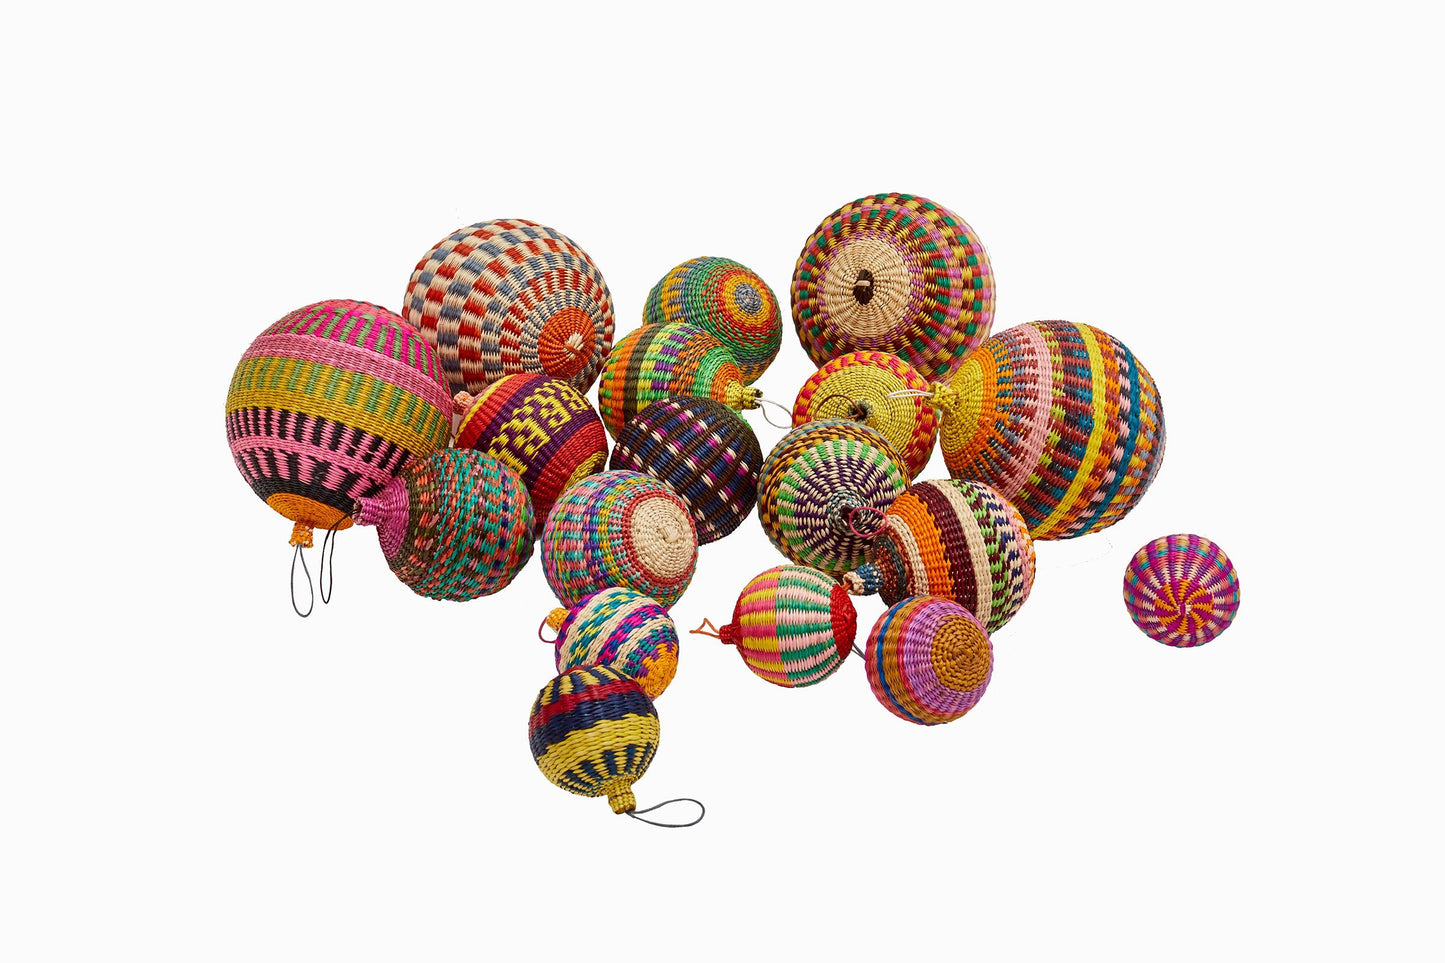 Medium Colombian woven balls.